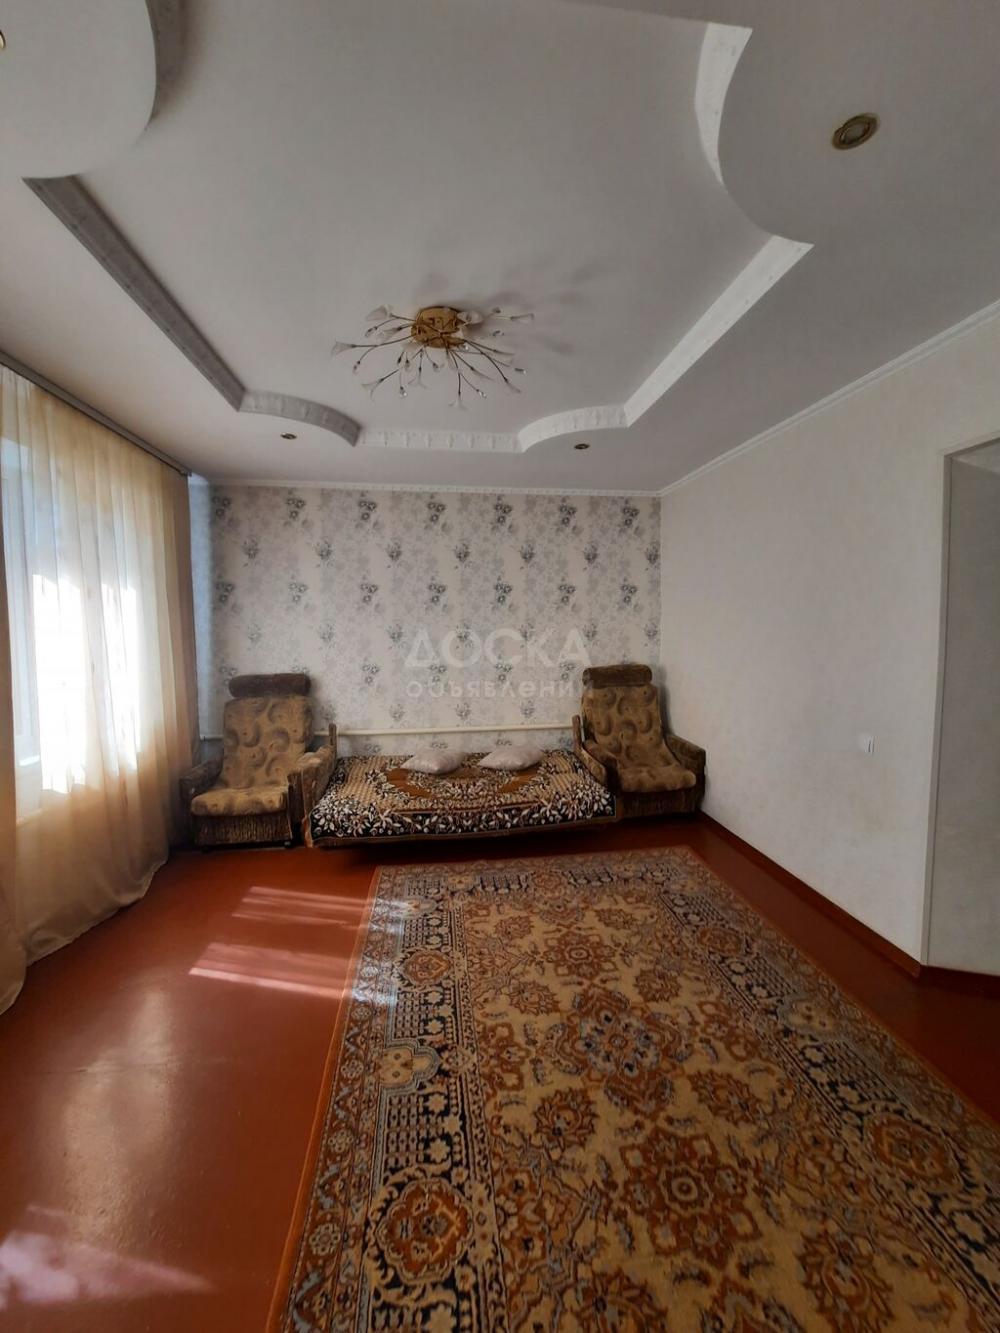 Продаю дом 4-ком. 97кв. м., этаж-1, 6-сот., стена саман, Кызыл Аскер ул. Арзамасская.